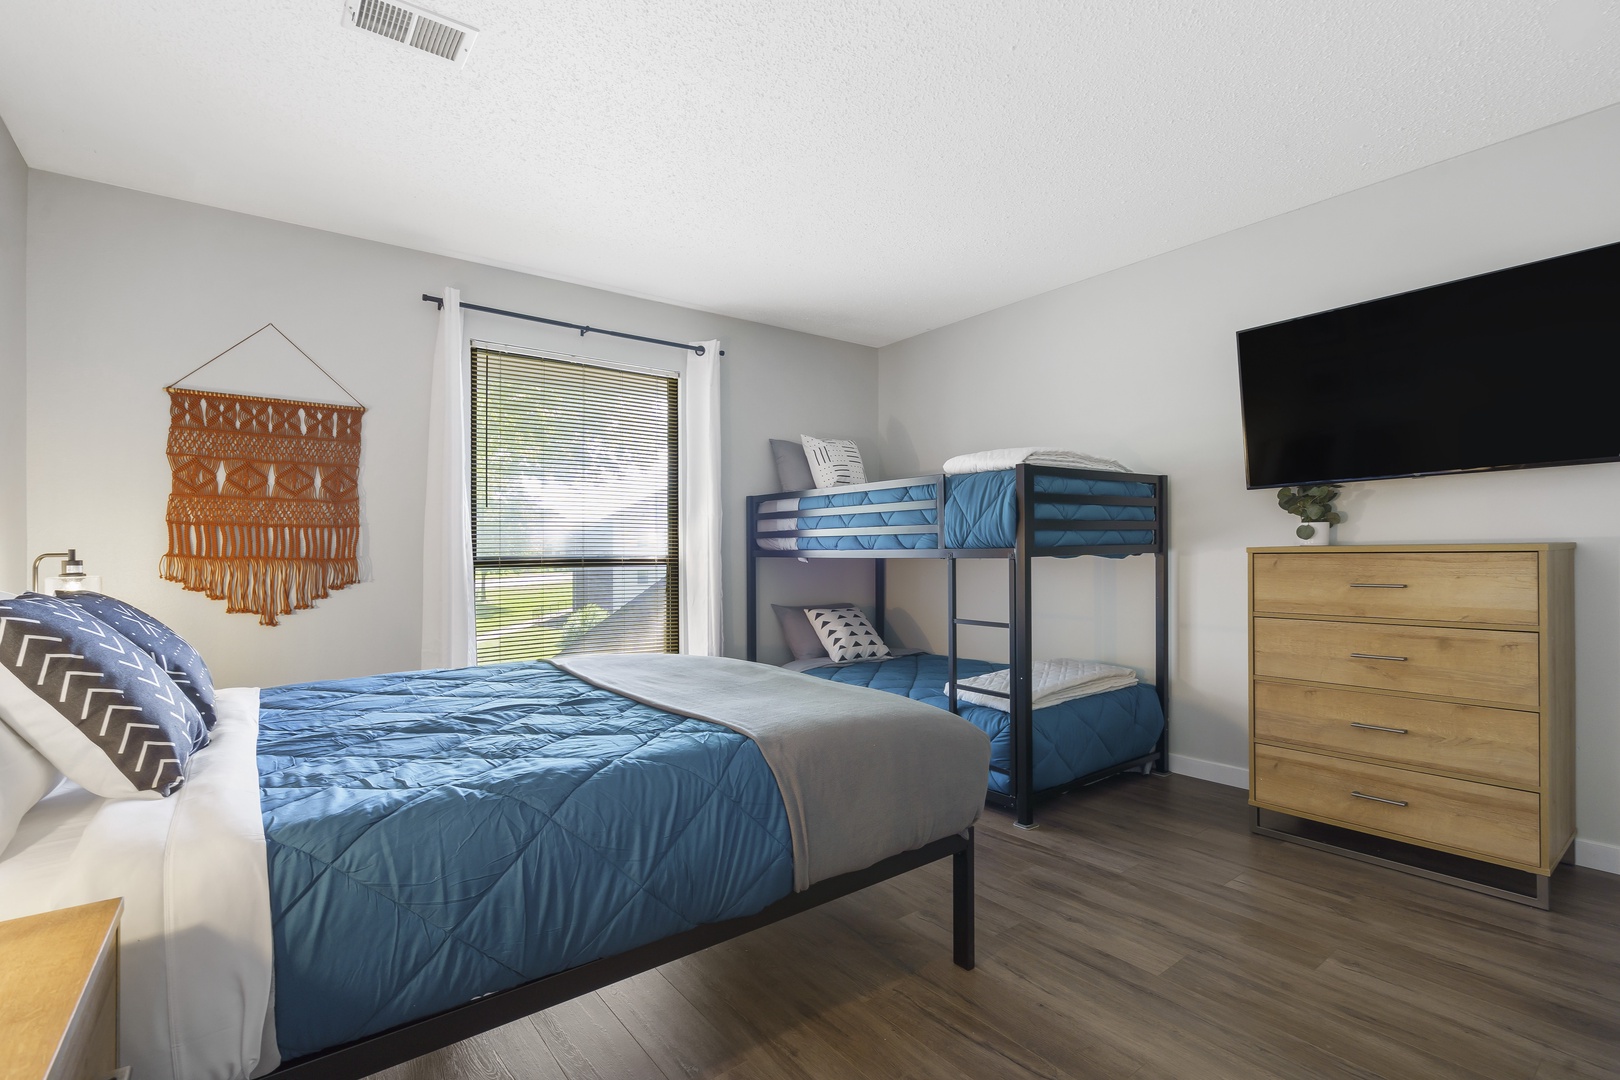 Bedroom 1 is equipped with queen bed & bunk beds